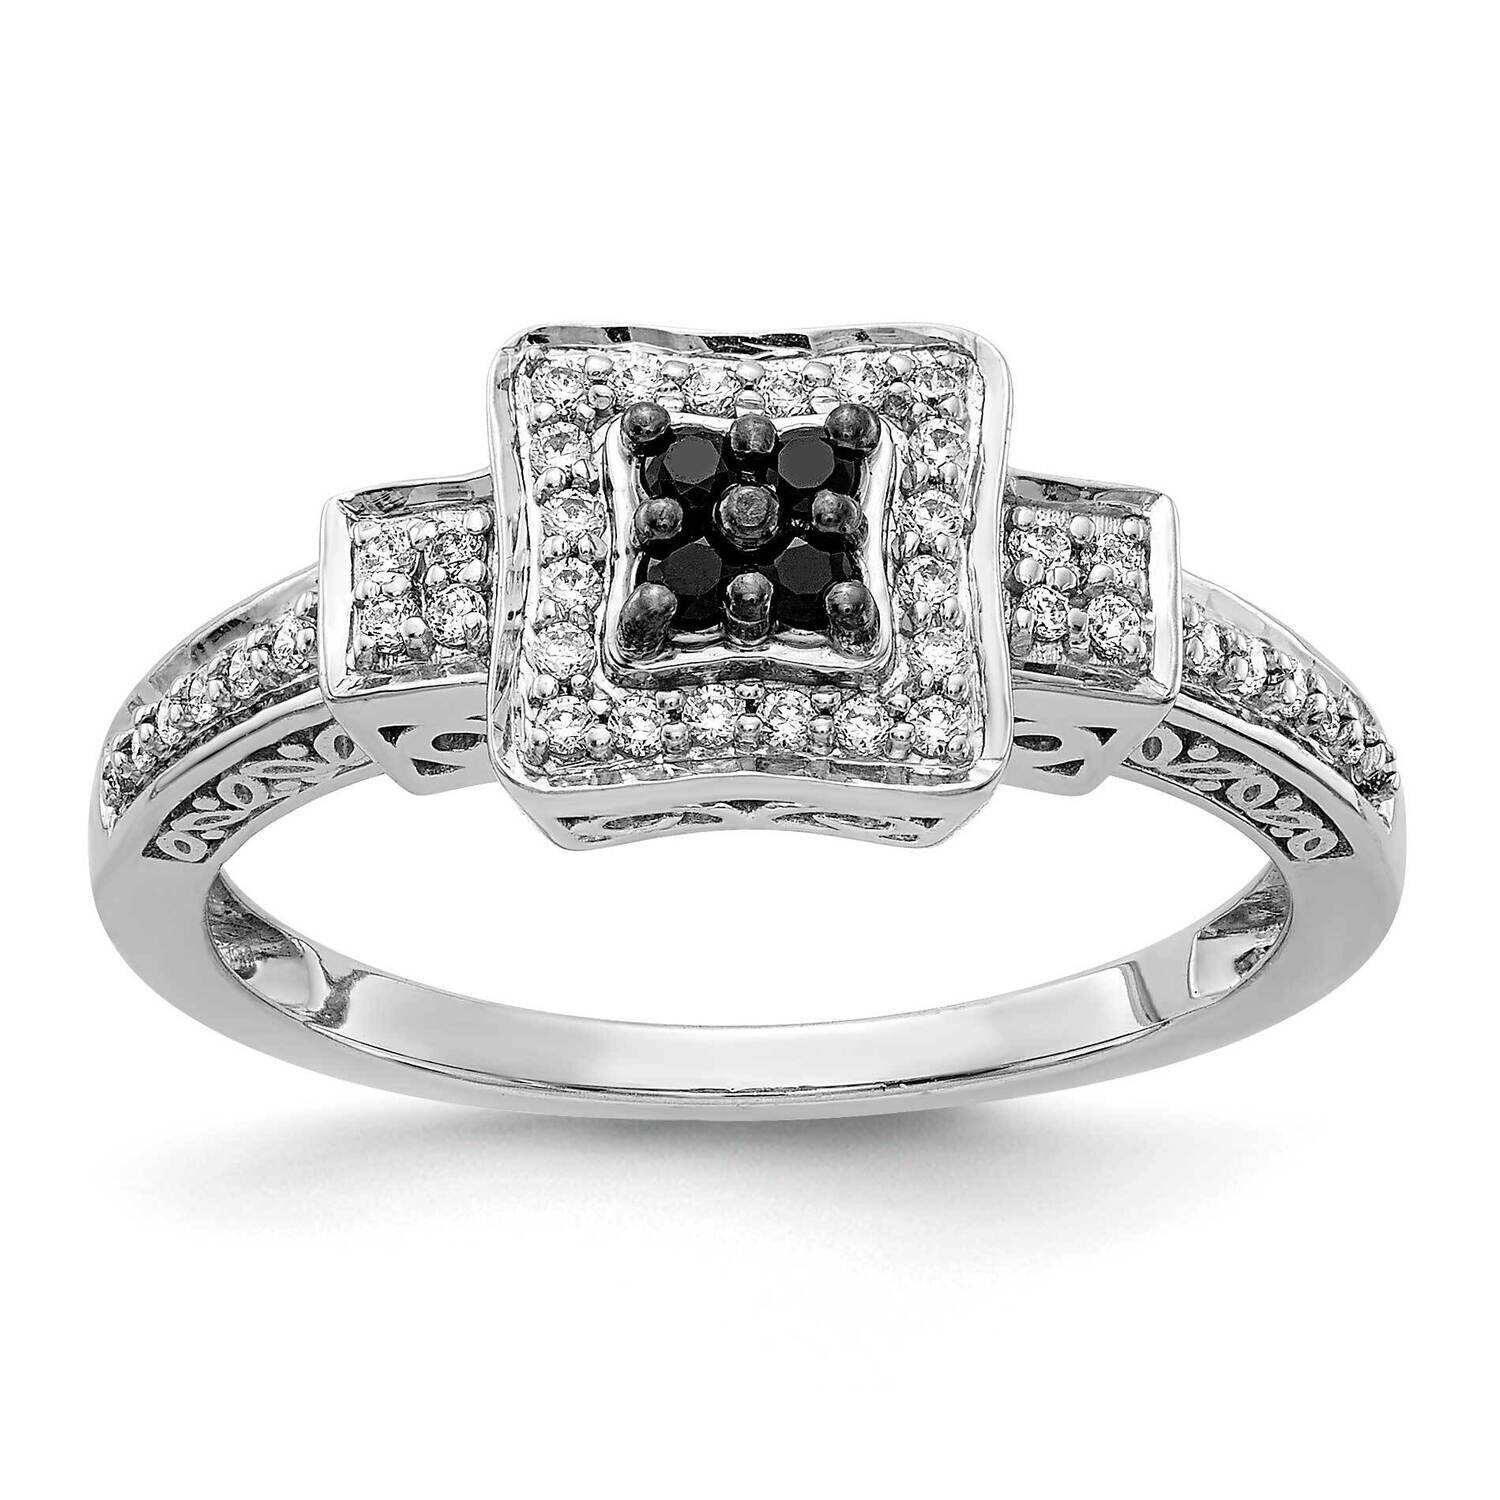 White & Black Diamond Square Ring 14k White Gold RM5689-BK-025-WA